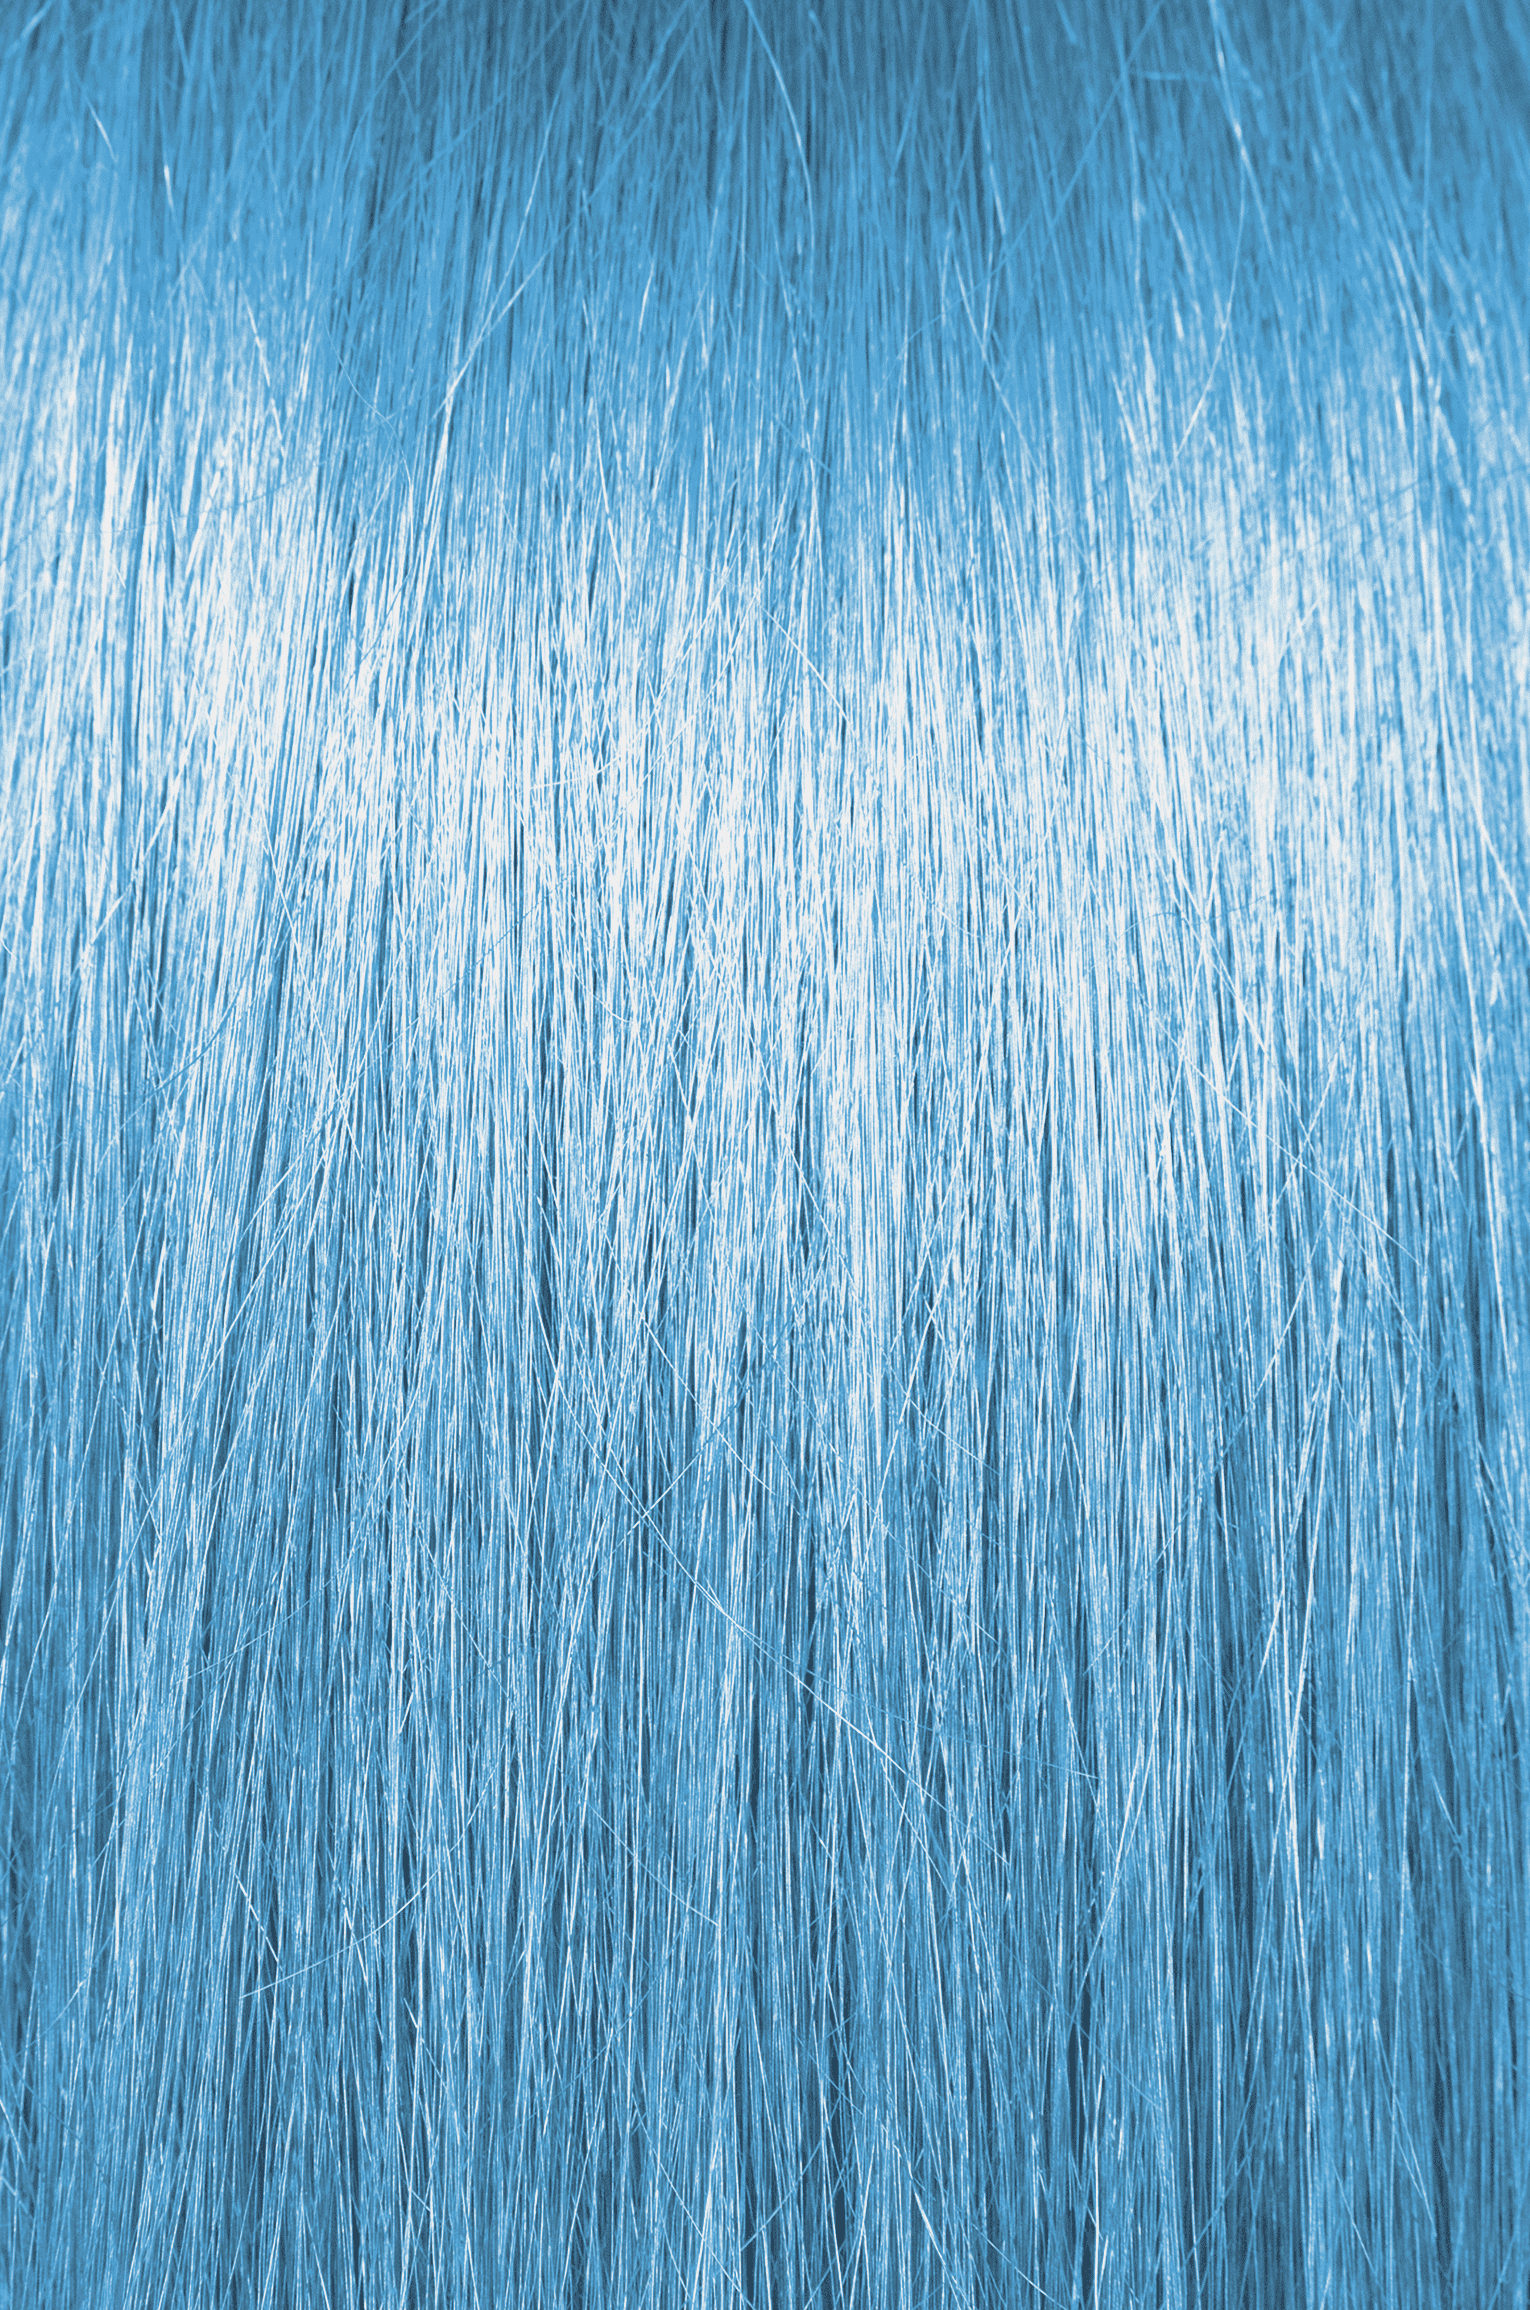 Pravana ChromaSilk VIVIDS Pastels Blissful Blue